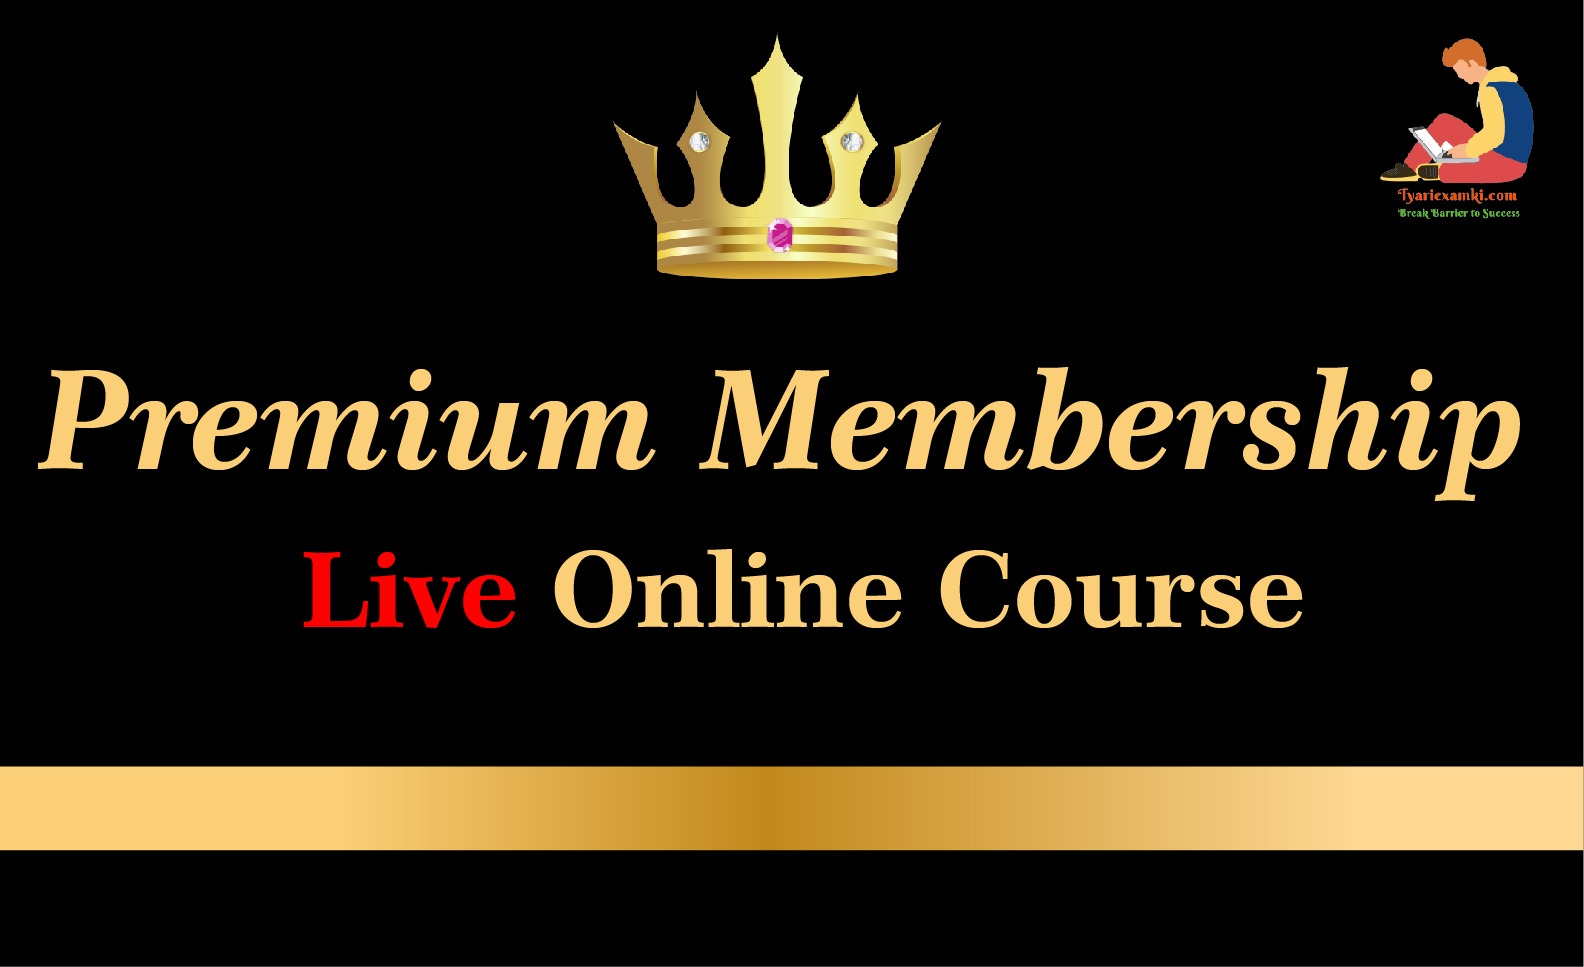 Premium Membership Live Online Course